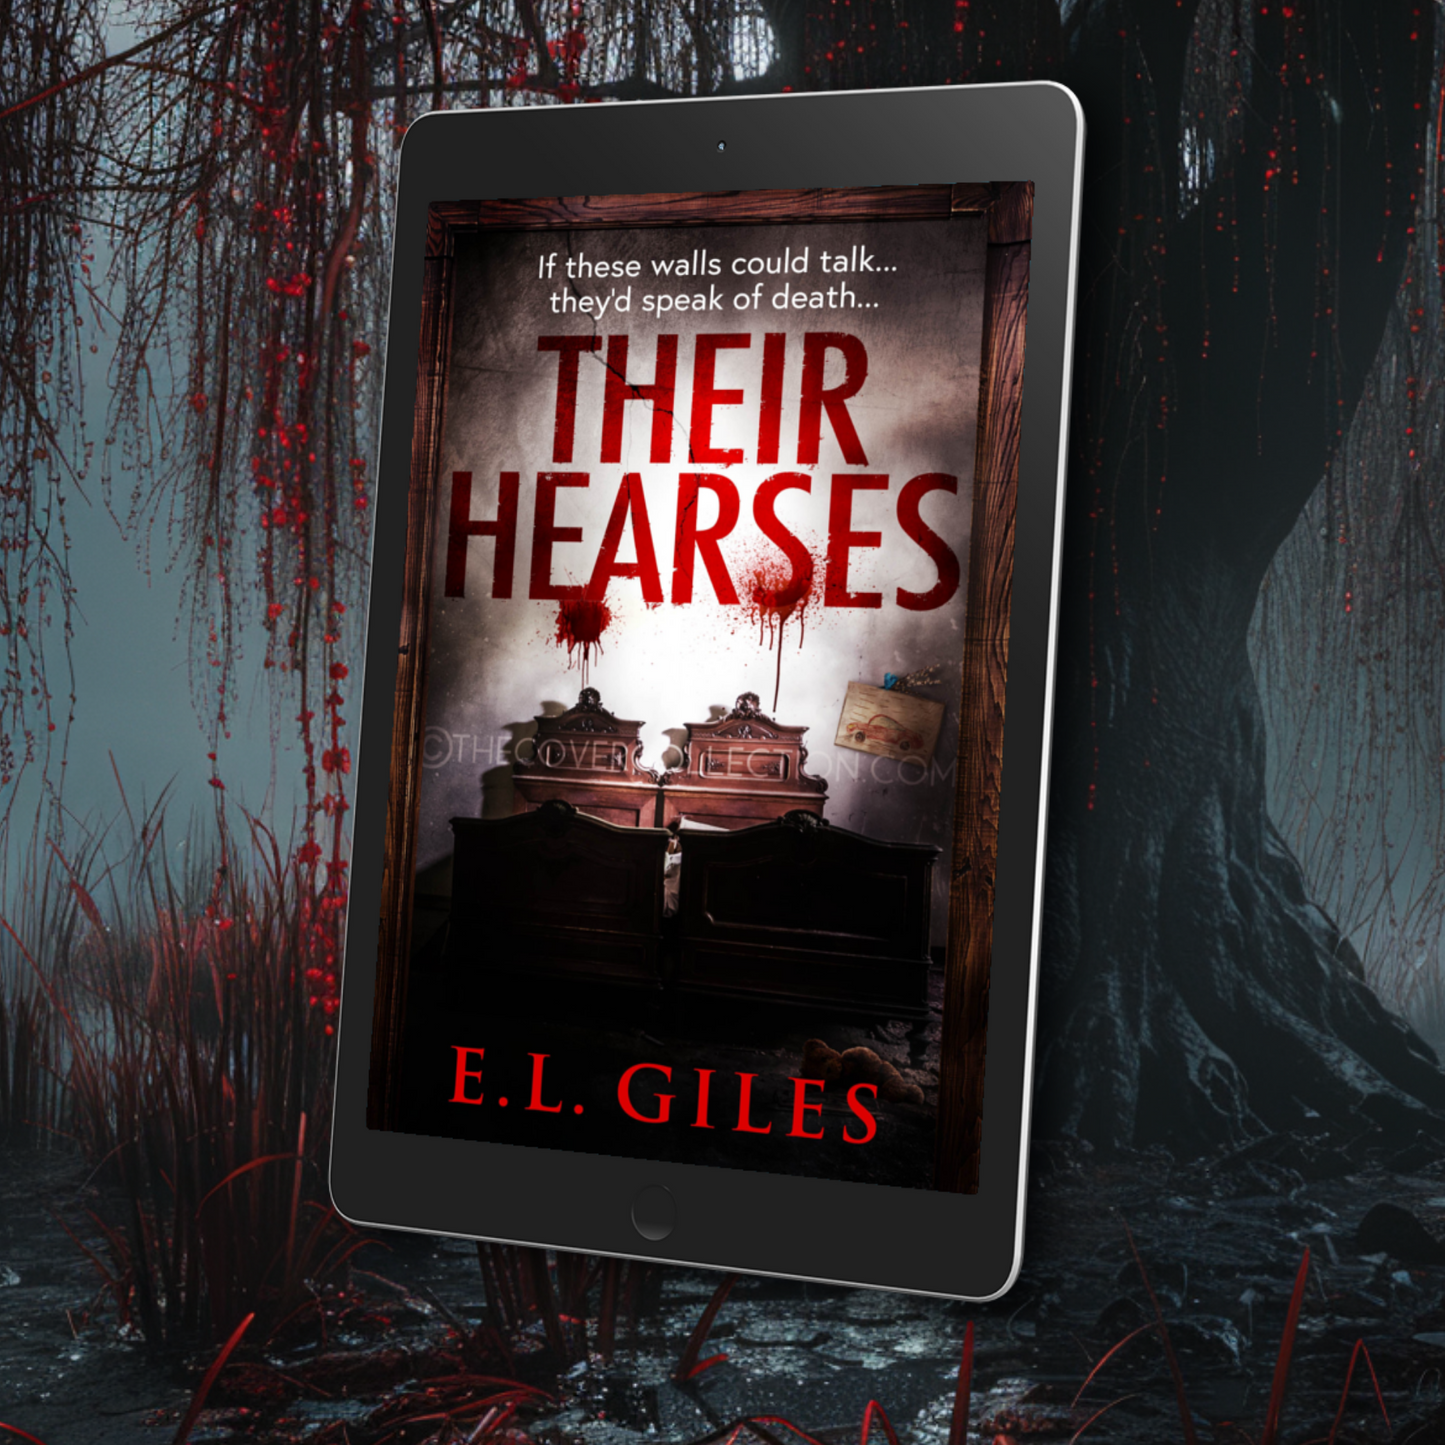 Their Hearses, by E.L. Giles